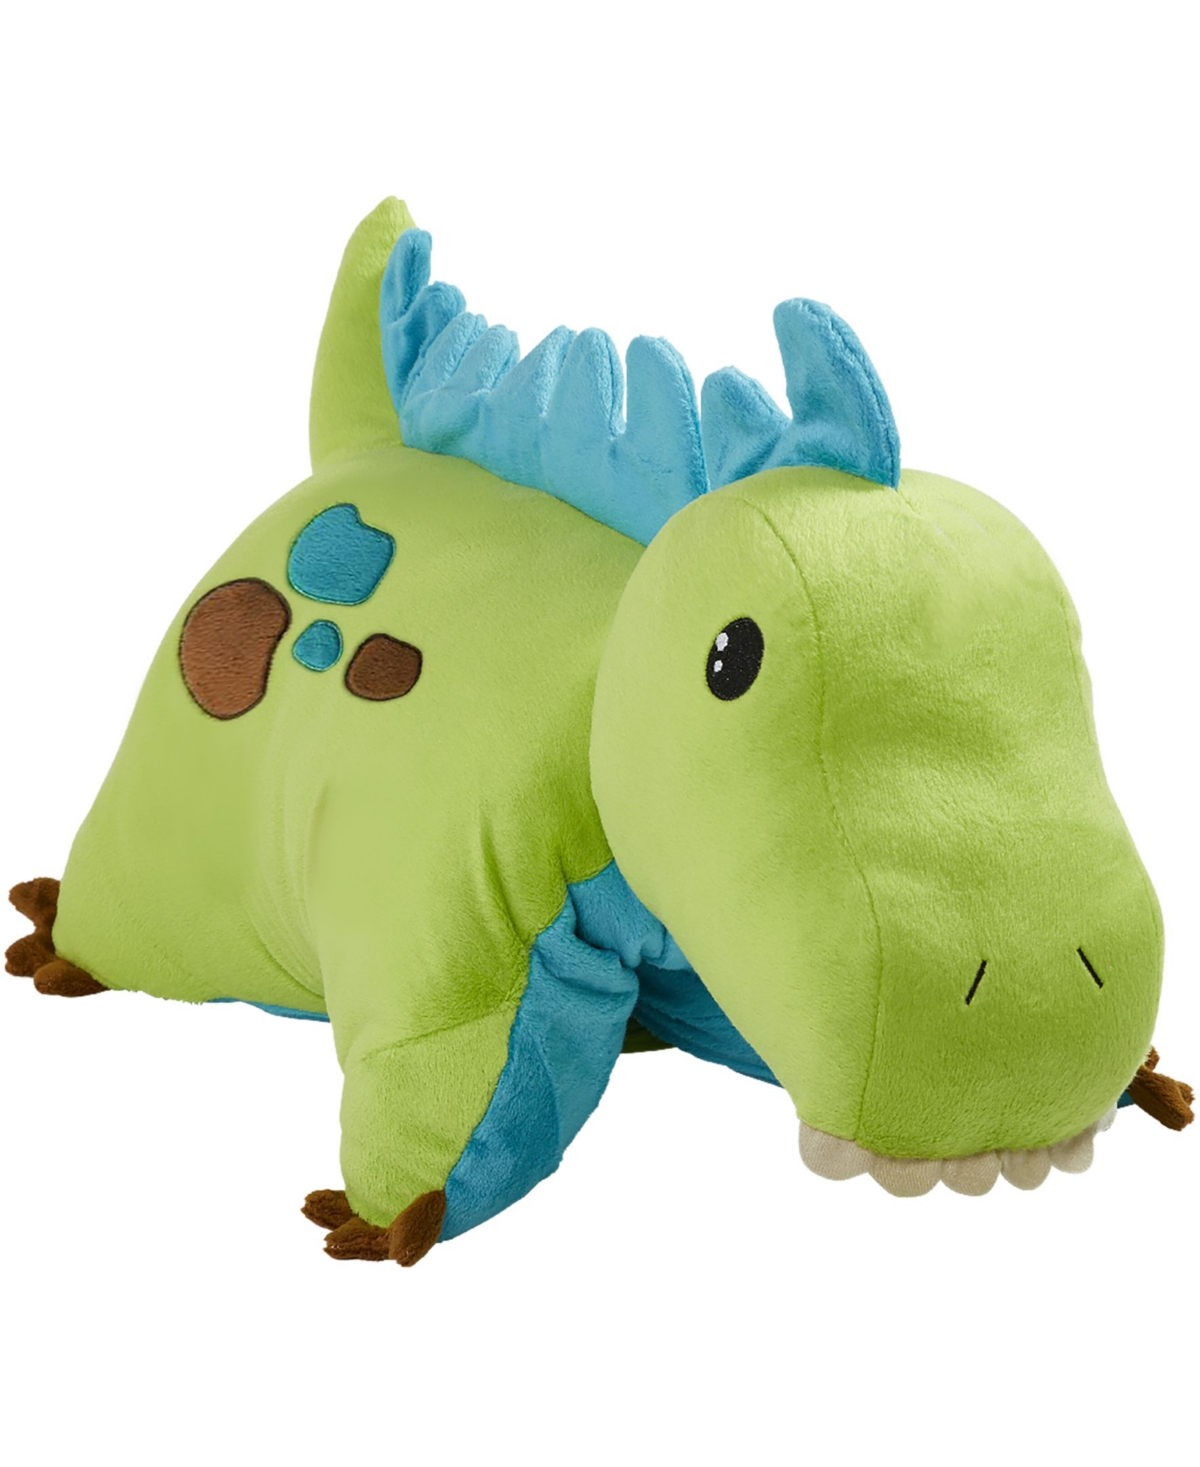 Pillow Pets Kids' Dinosaur Stuffed Animal Plush Toy In Medium Gre